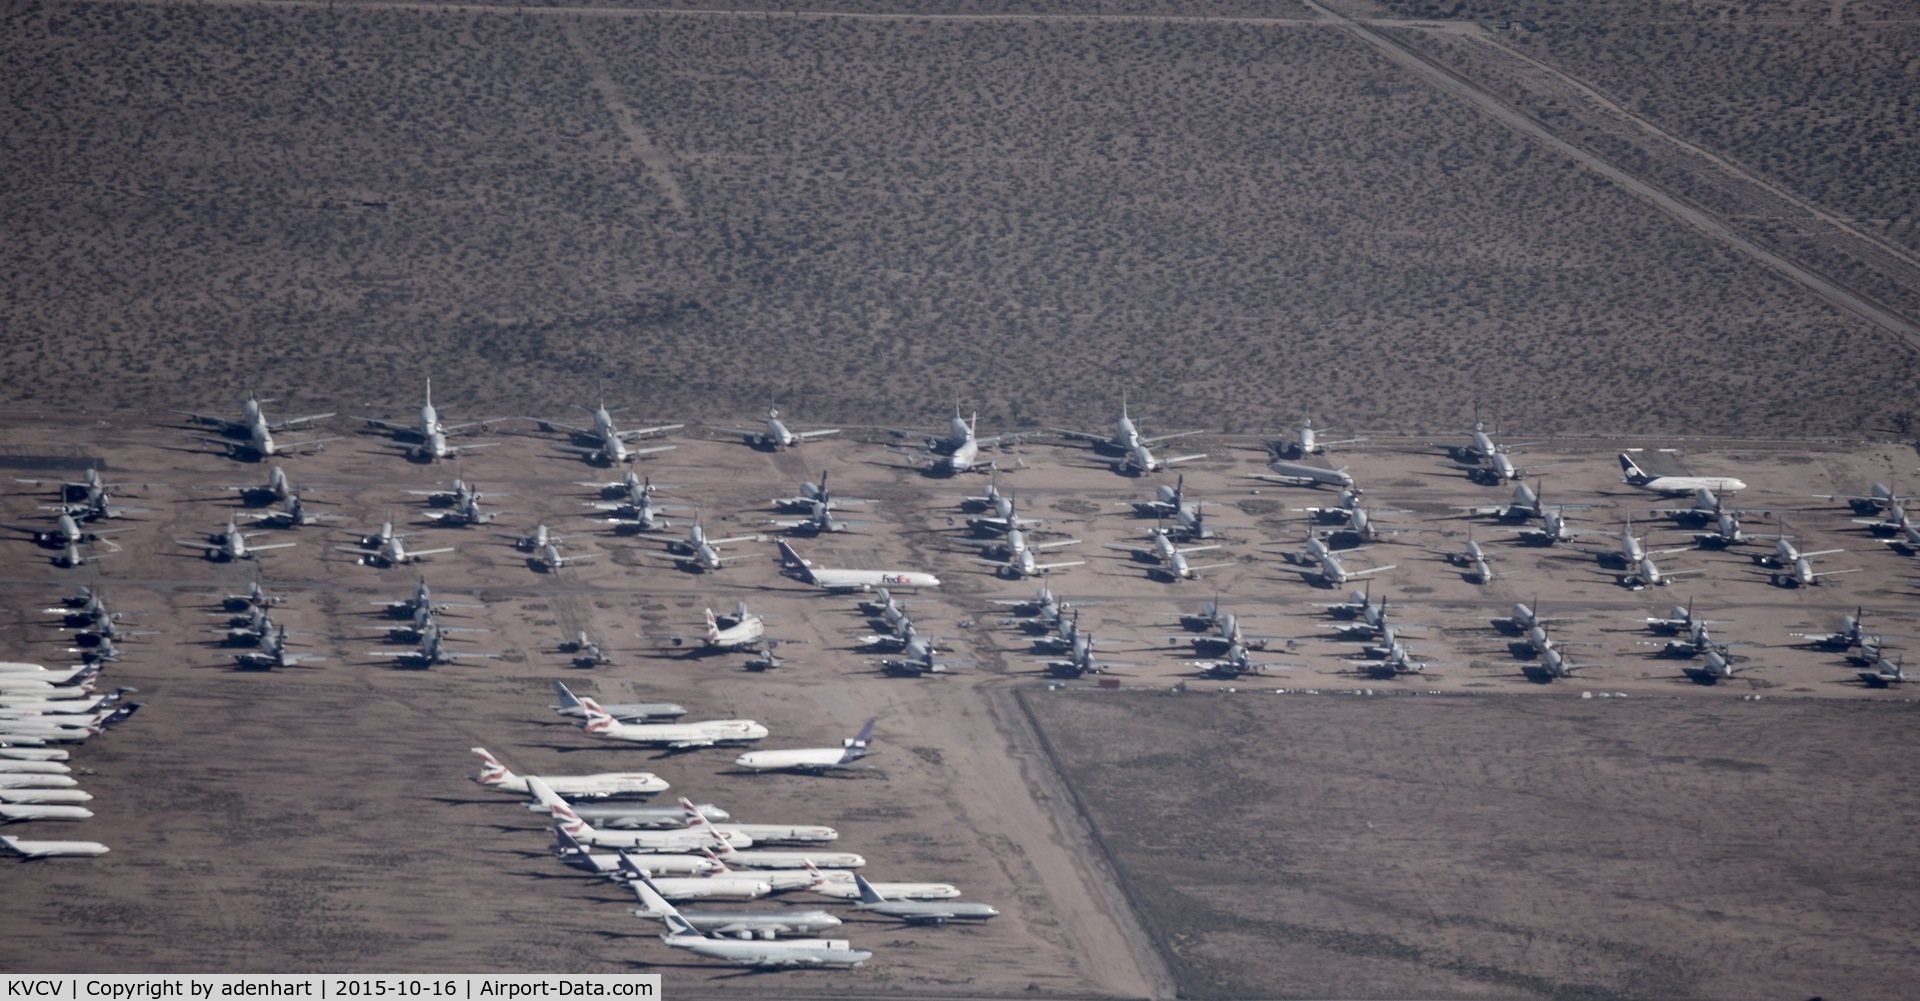 Southern California Logistics Airport (VCV) - KVCV boneyard taken from N64023